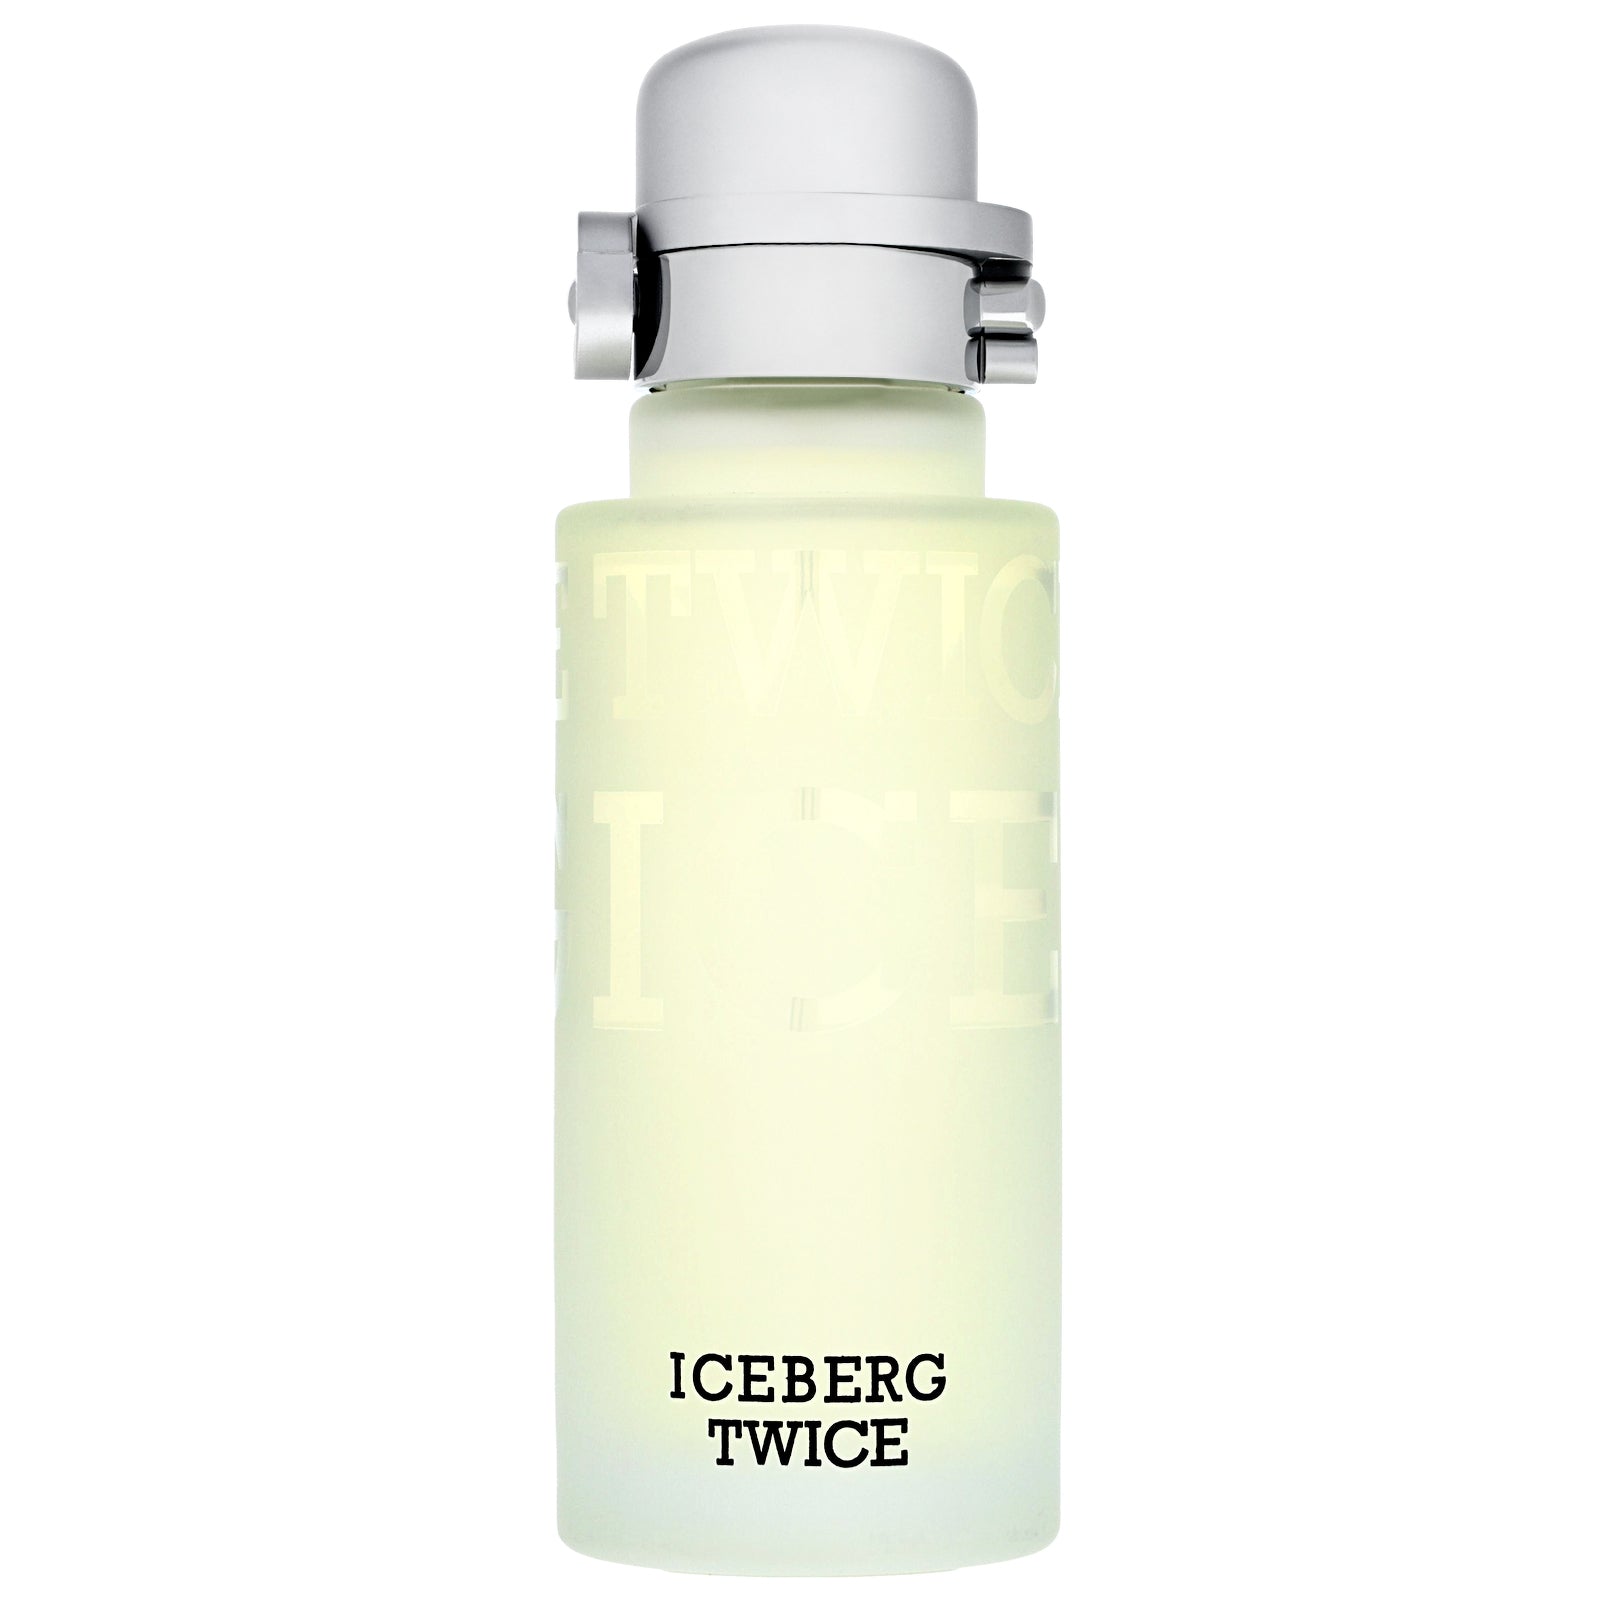 Iceberg Twice For Him Eau De Toilette Spray 125ml - Feel Gorgeous